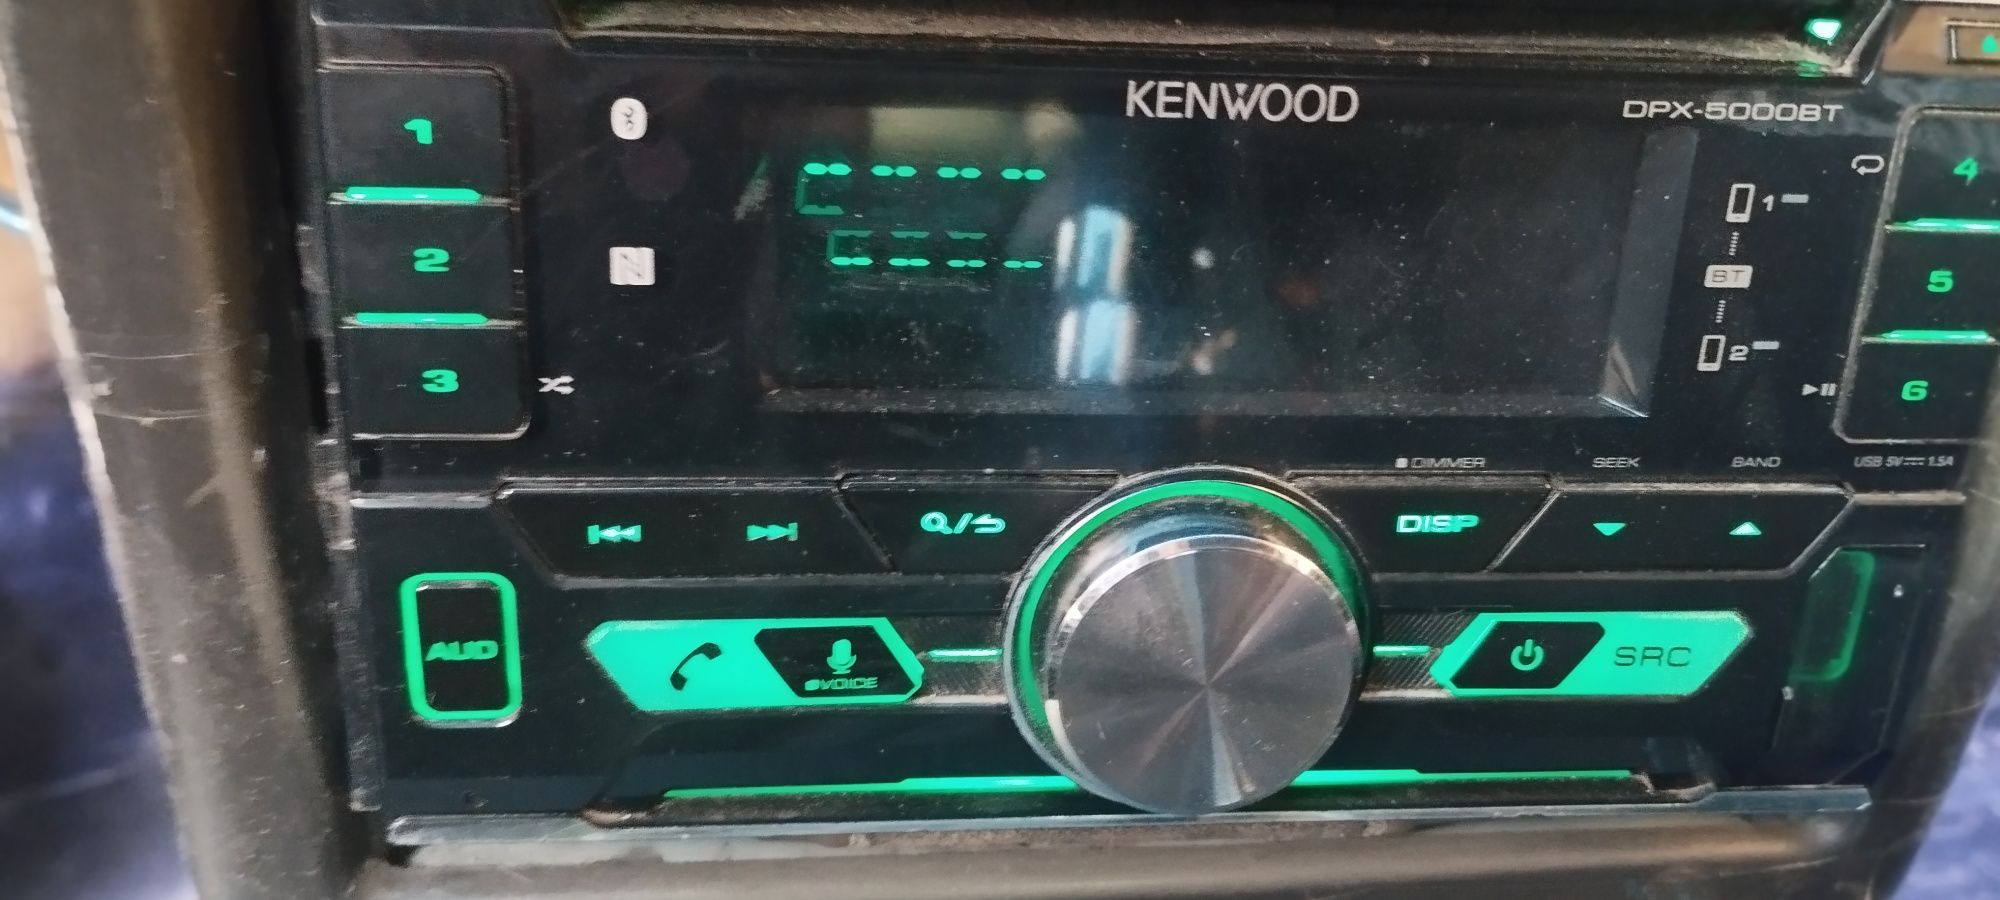 Kenwood original mafon Bluetooth bor